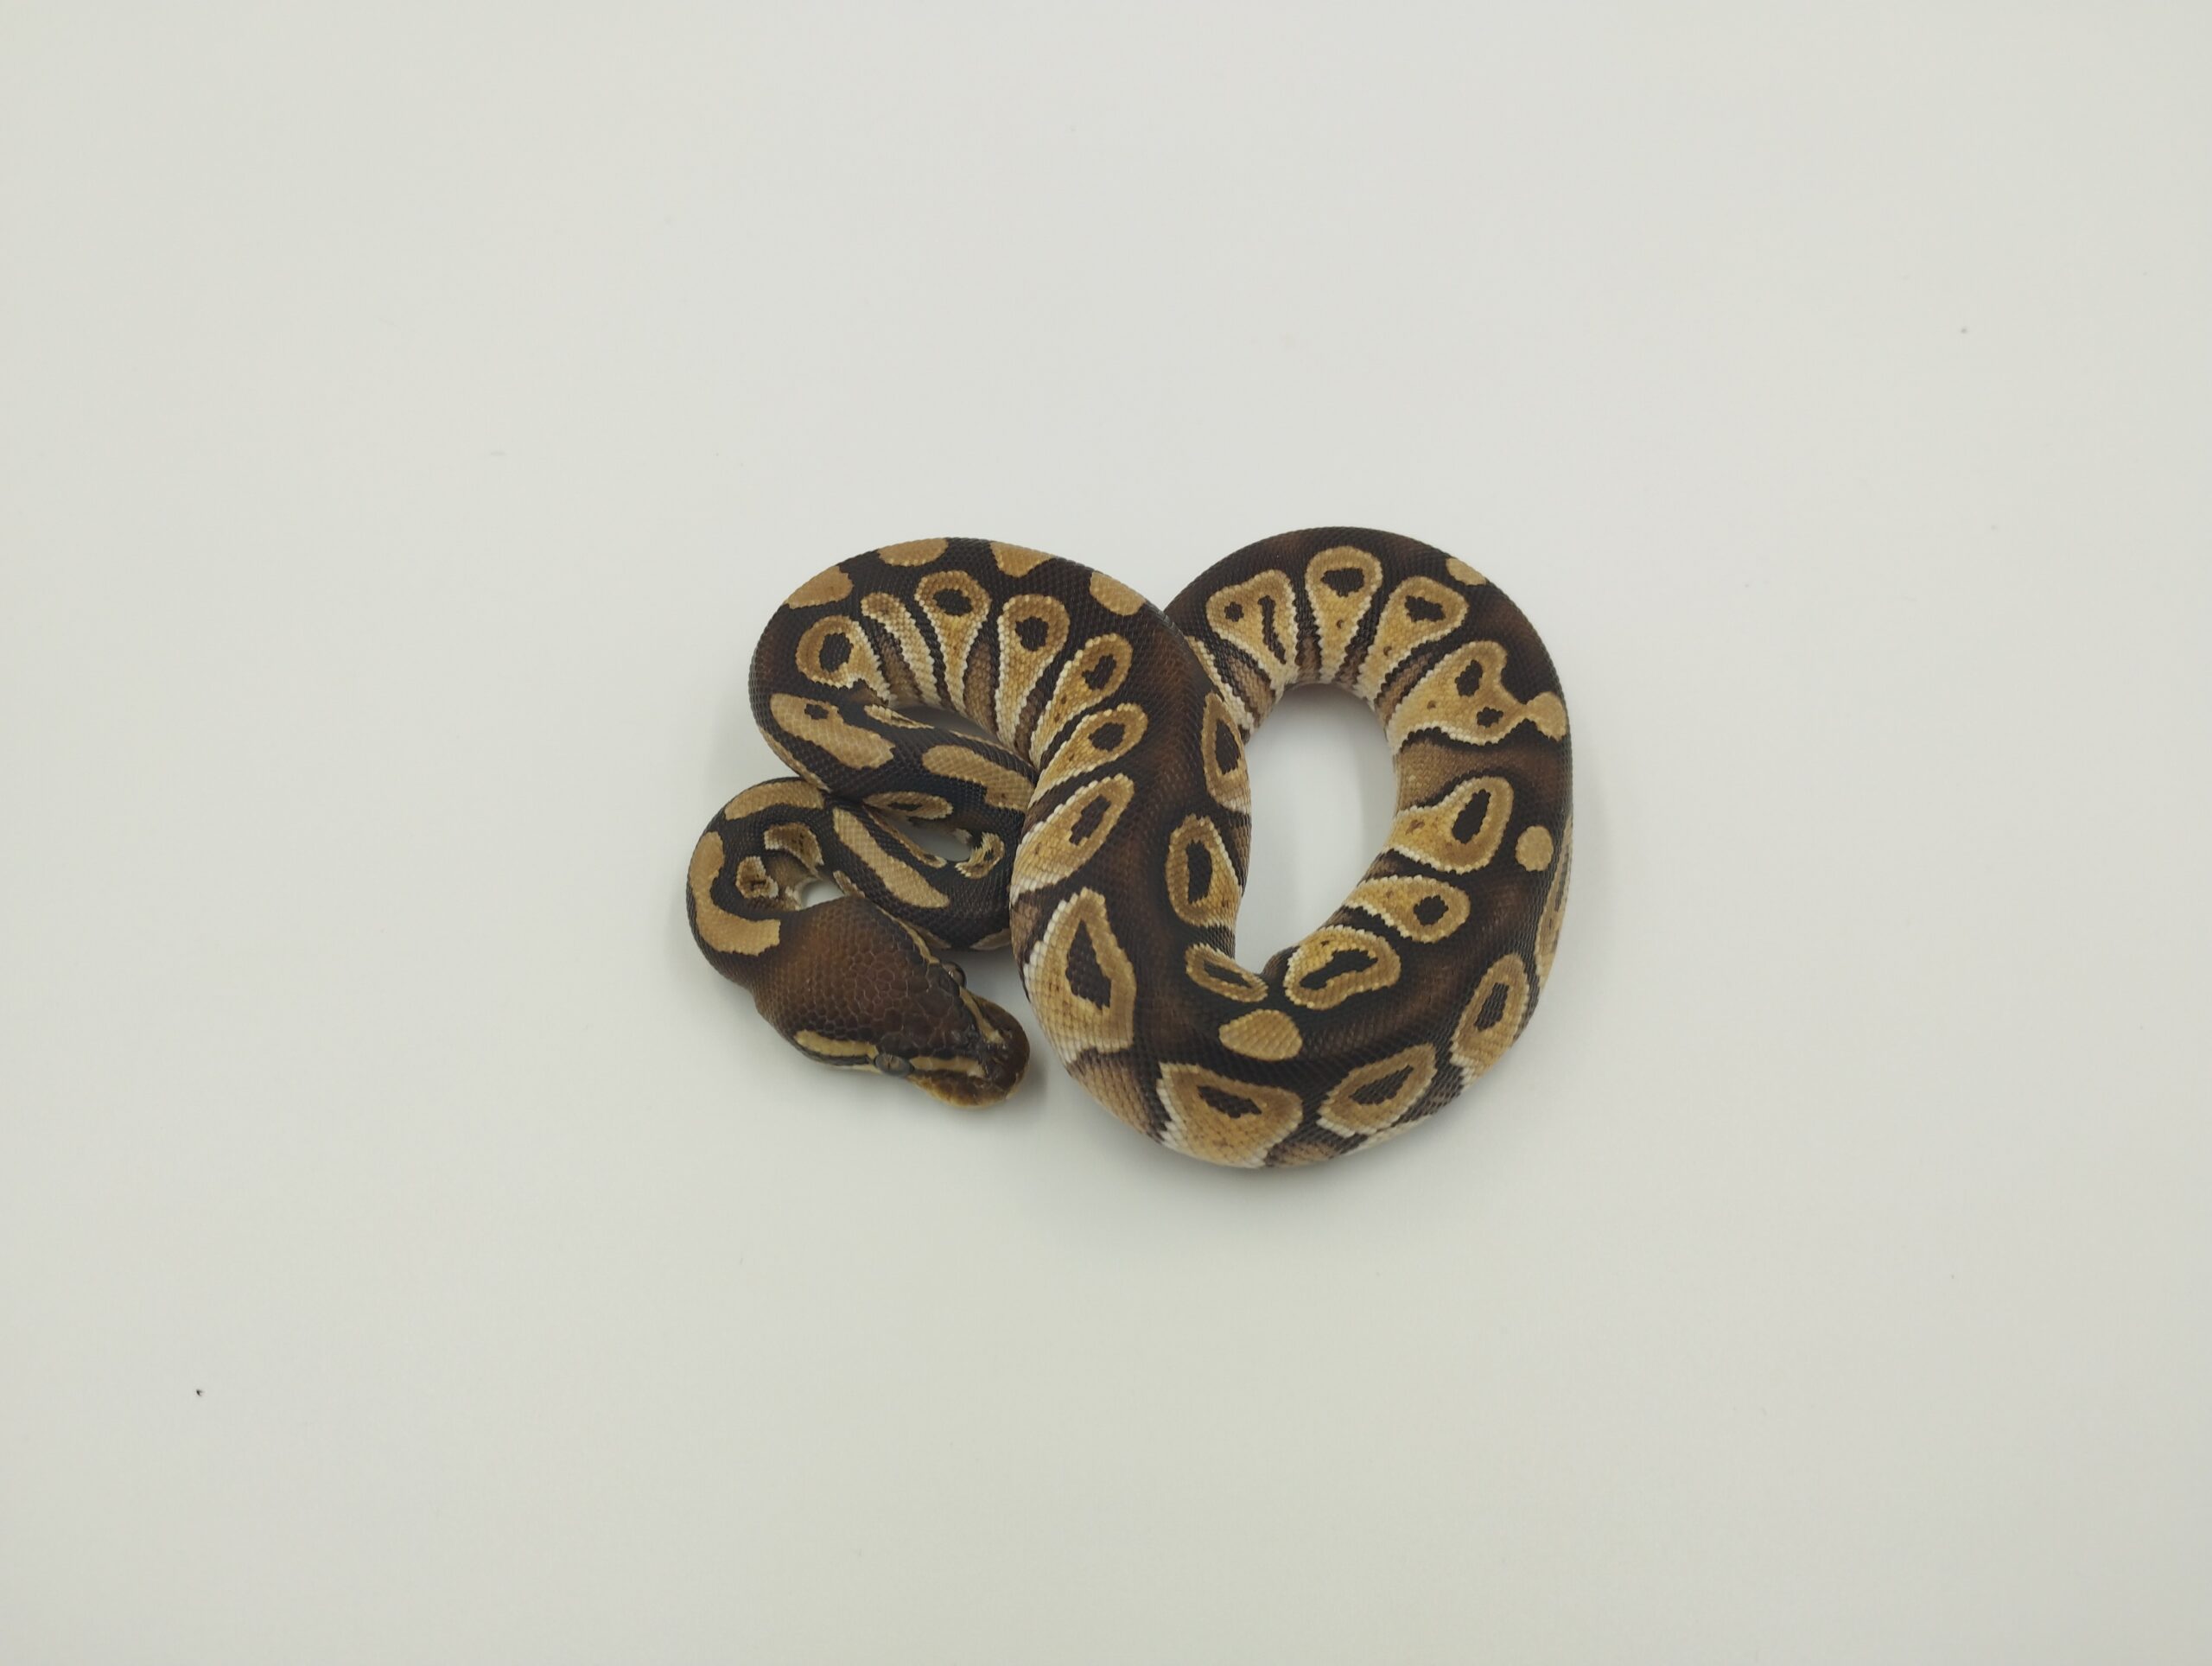 Ball Python | Mojave / Αρσενικό